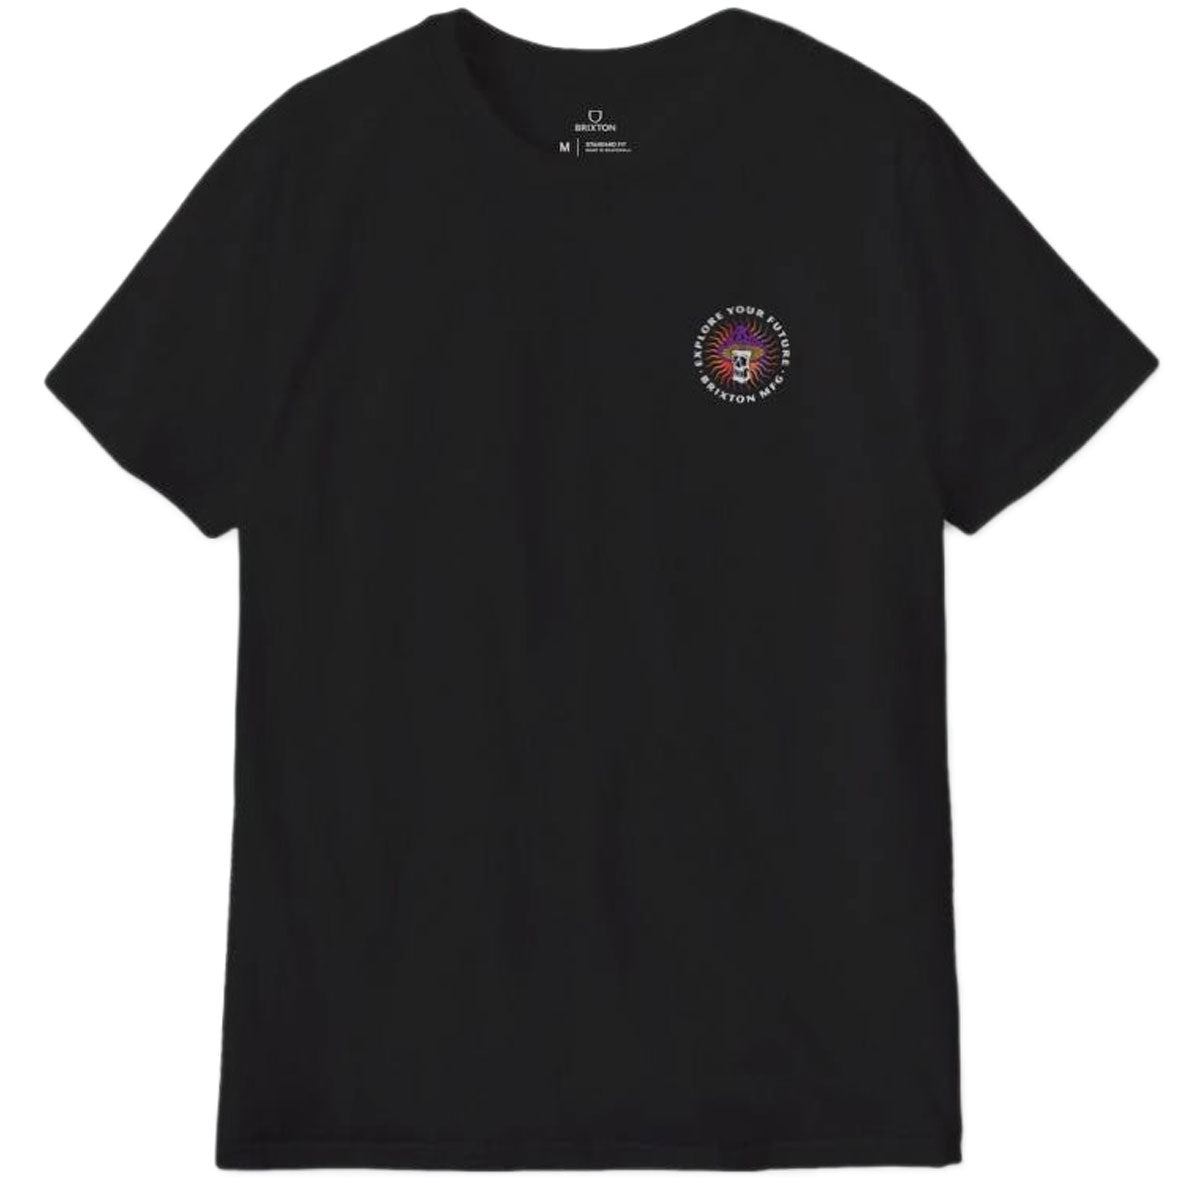 Brixton Future Relaxed T-Shirt - Black Garment Dye image 2